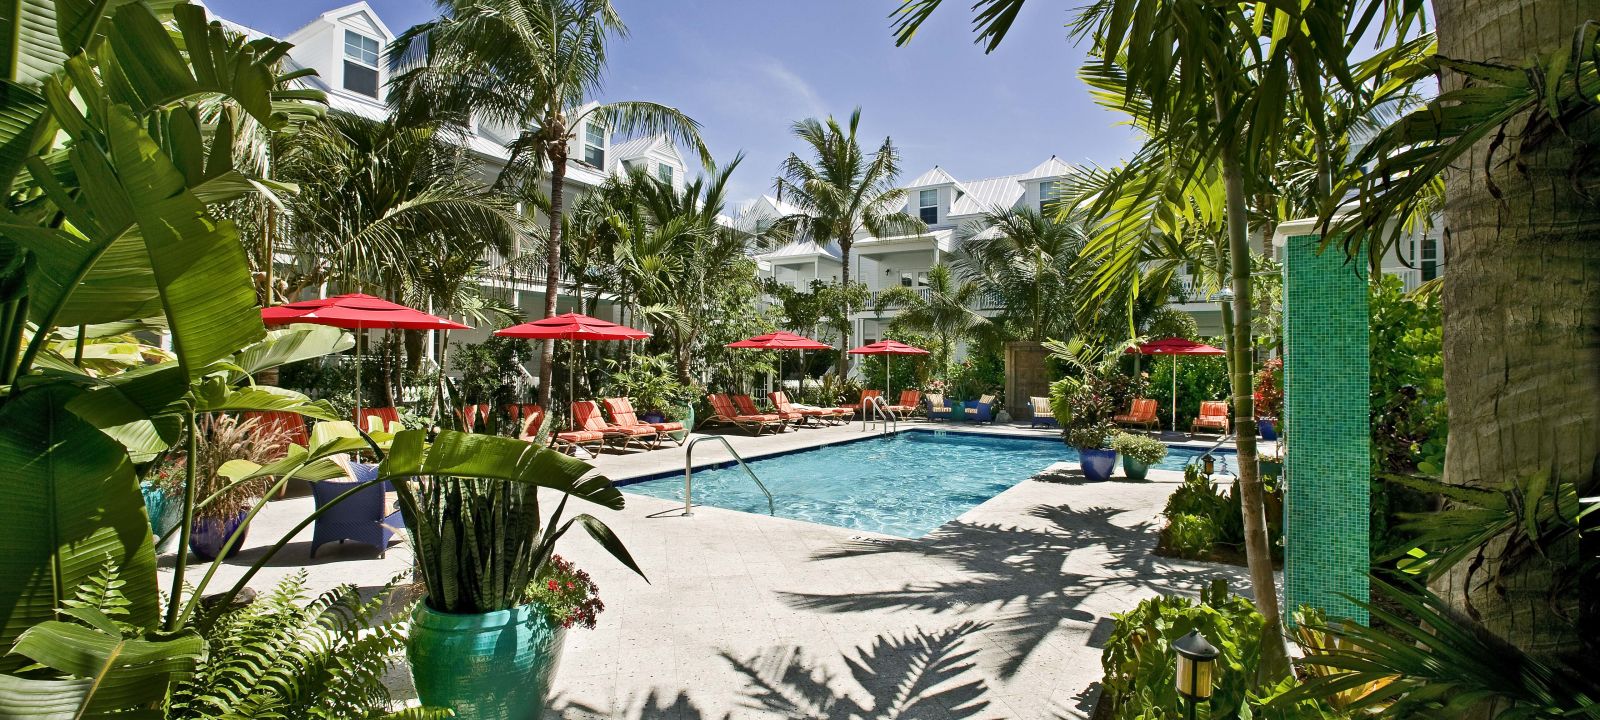 A Resort In The Garden